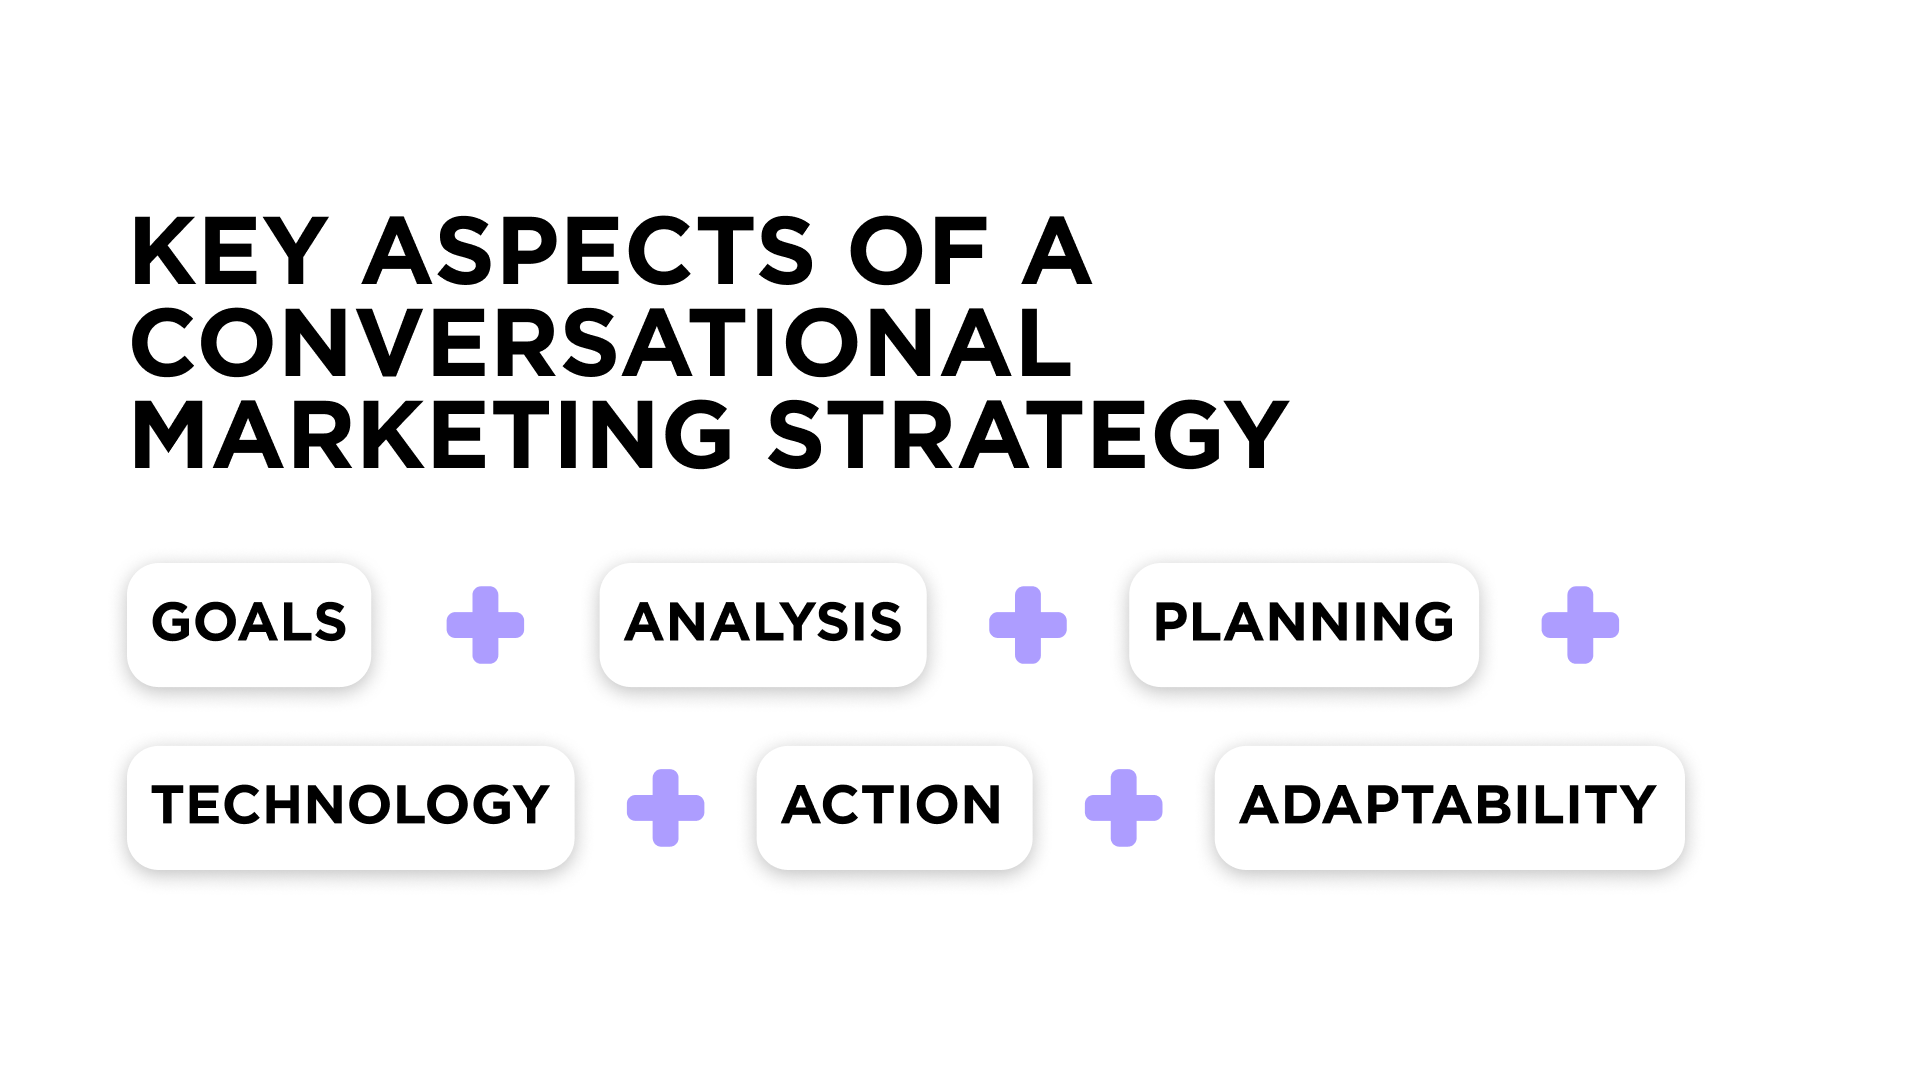 Key aspects of a conversational marketing strategy